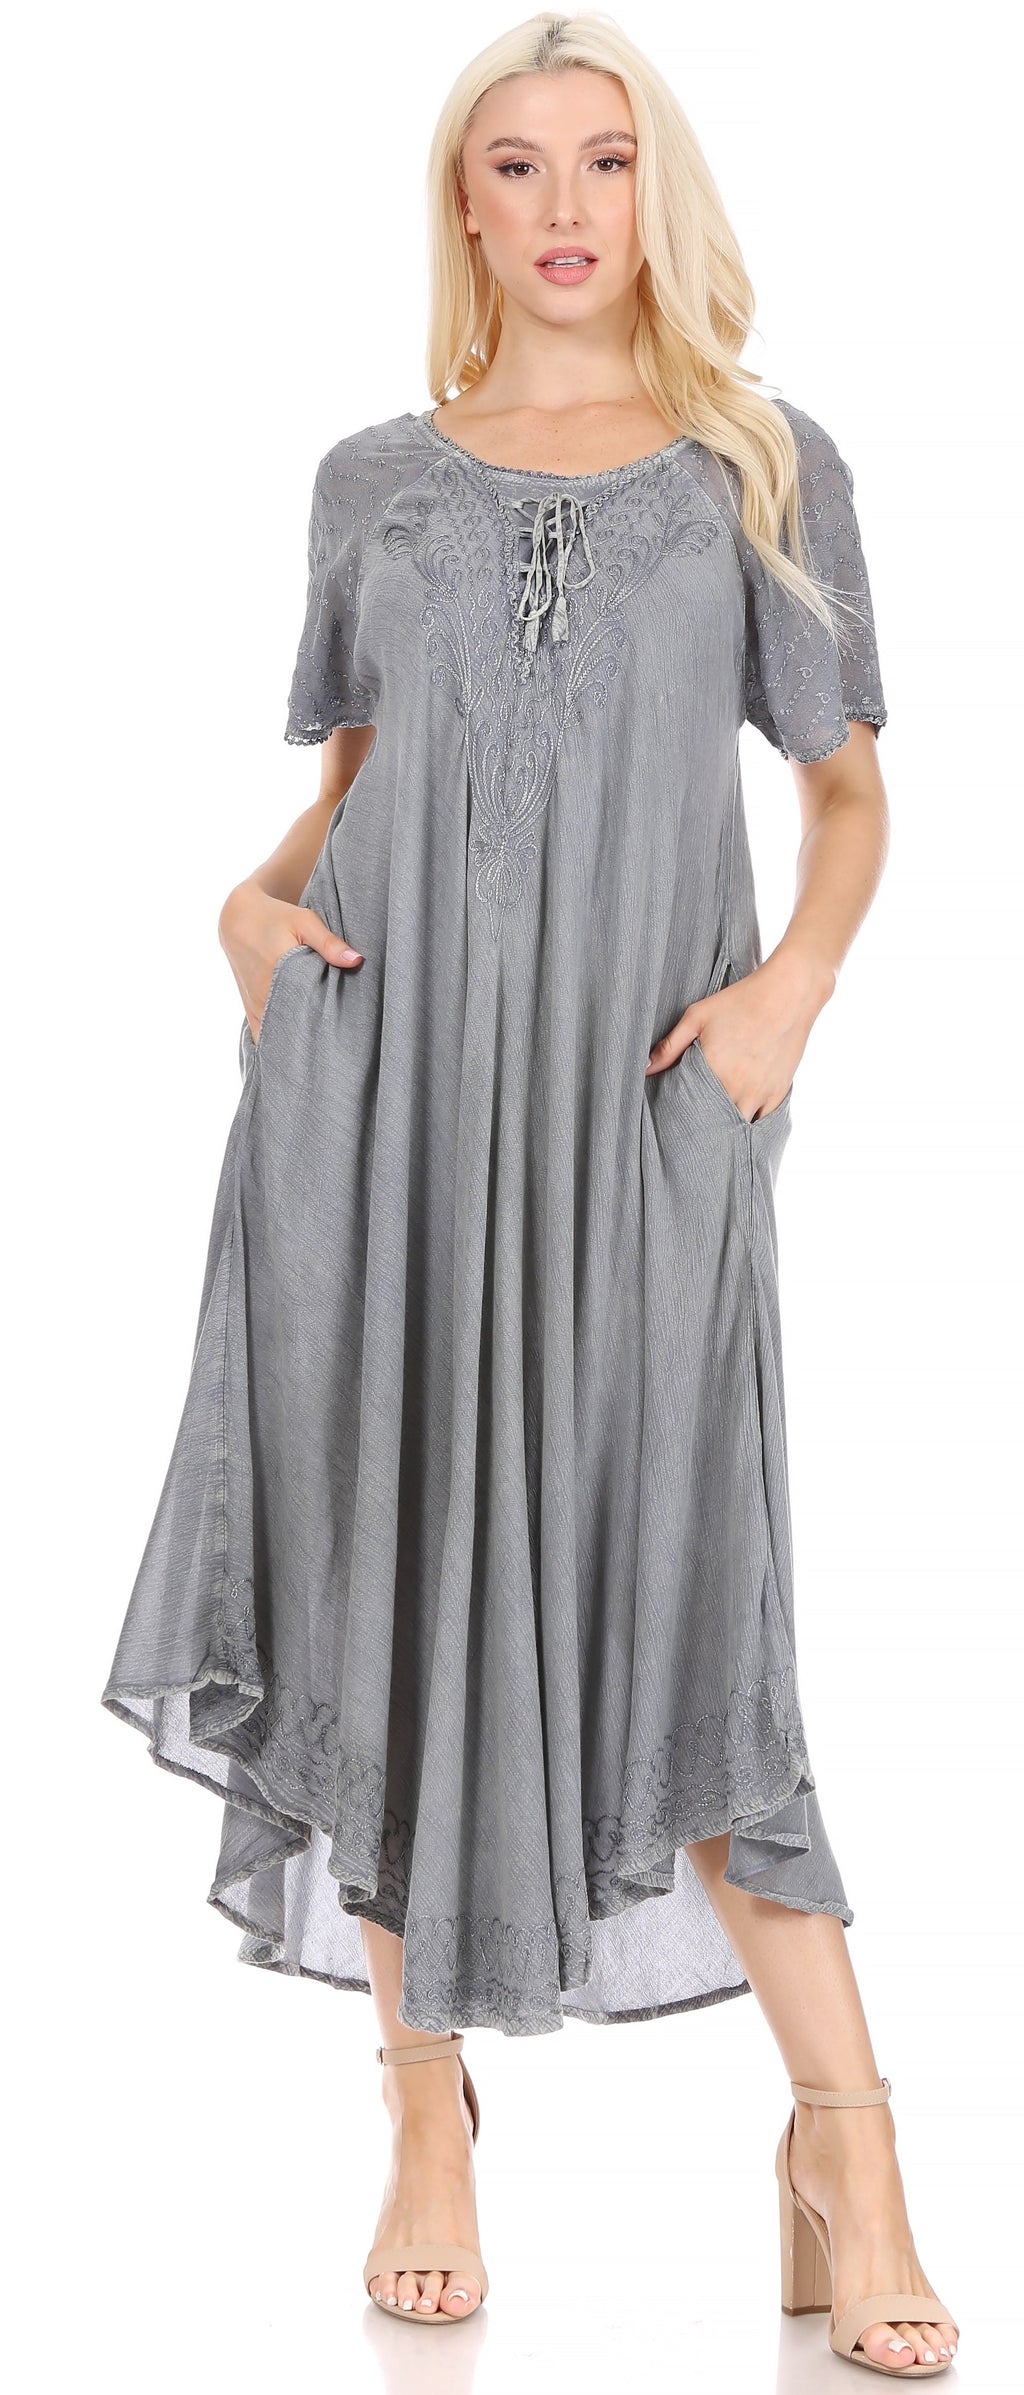 Sakkas Egan Women's Embroidered Caftan Dress w/ Cap Sleeves